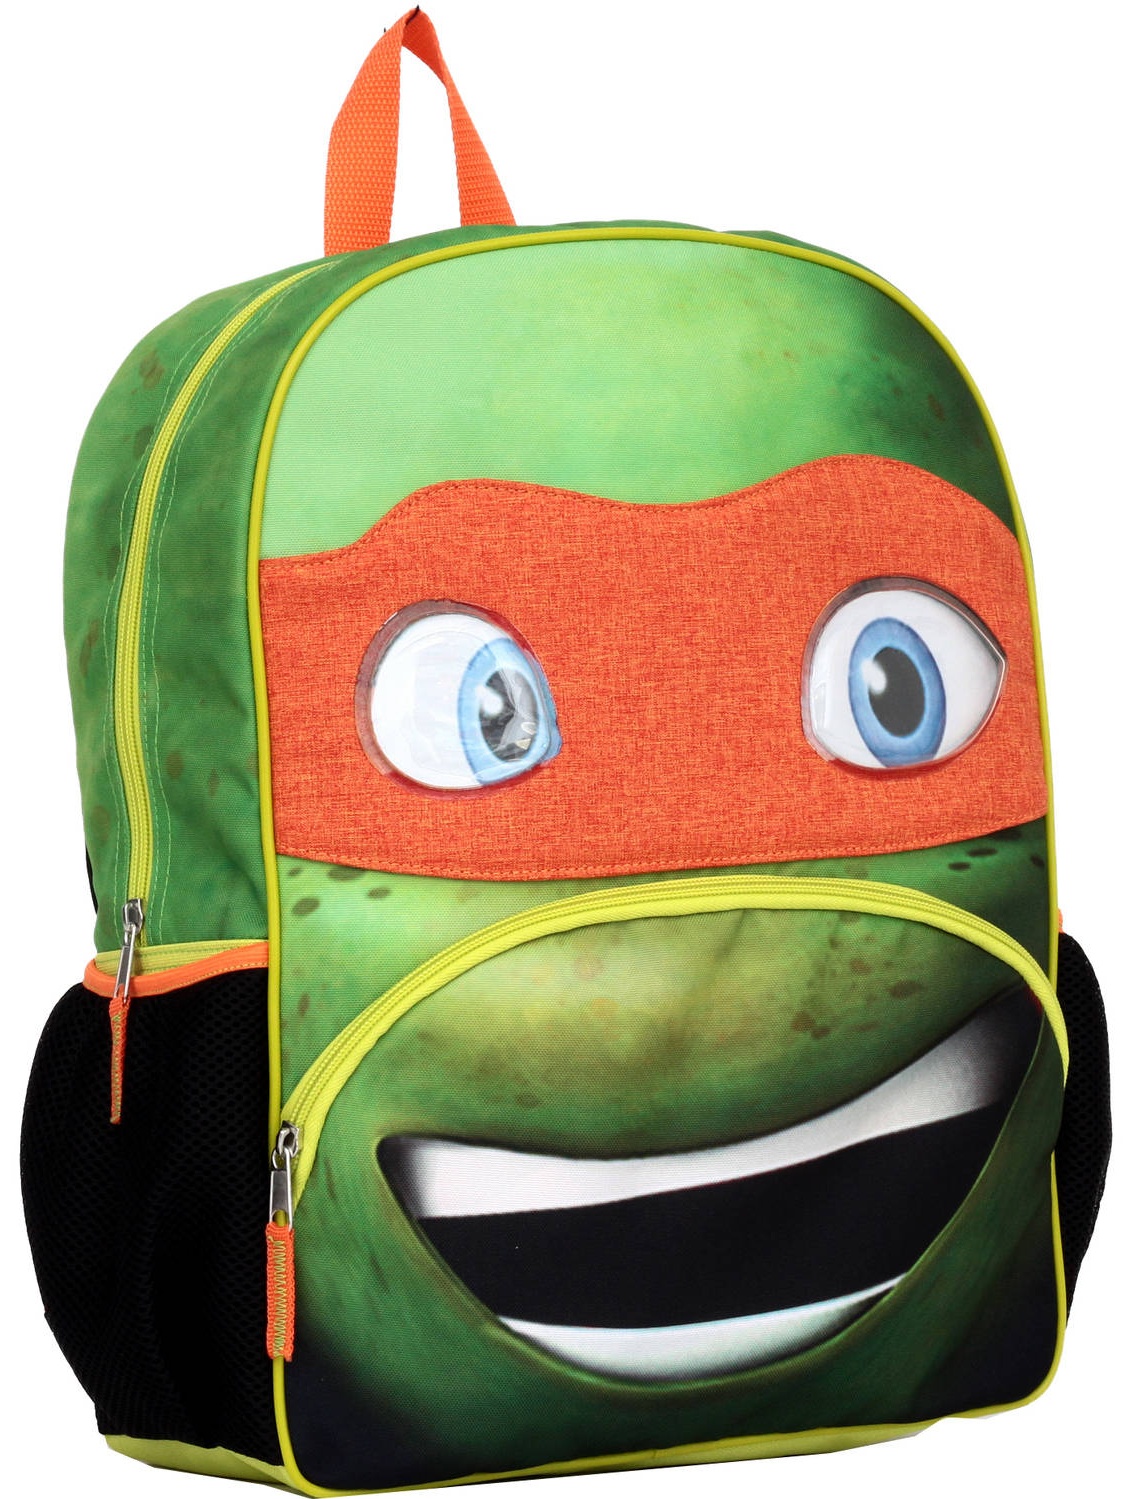 16" Teenage Mutant Ninja Turtle Backpack- Michelangelo Big Face - image 1 of 2